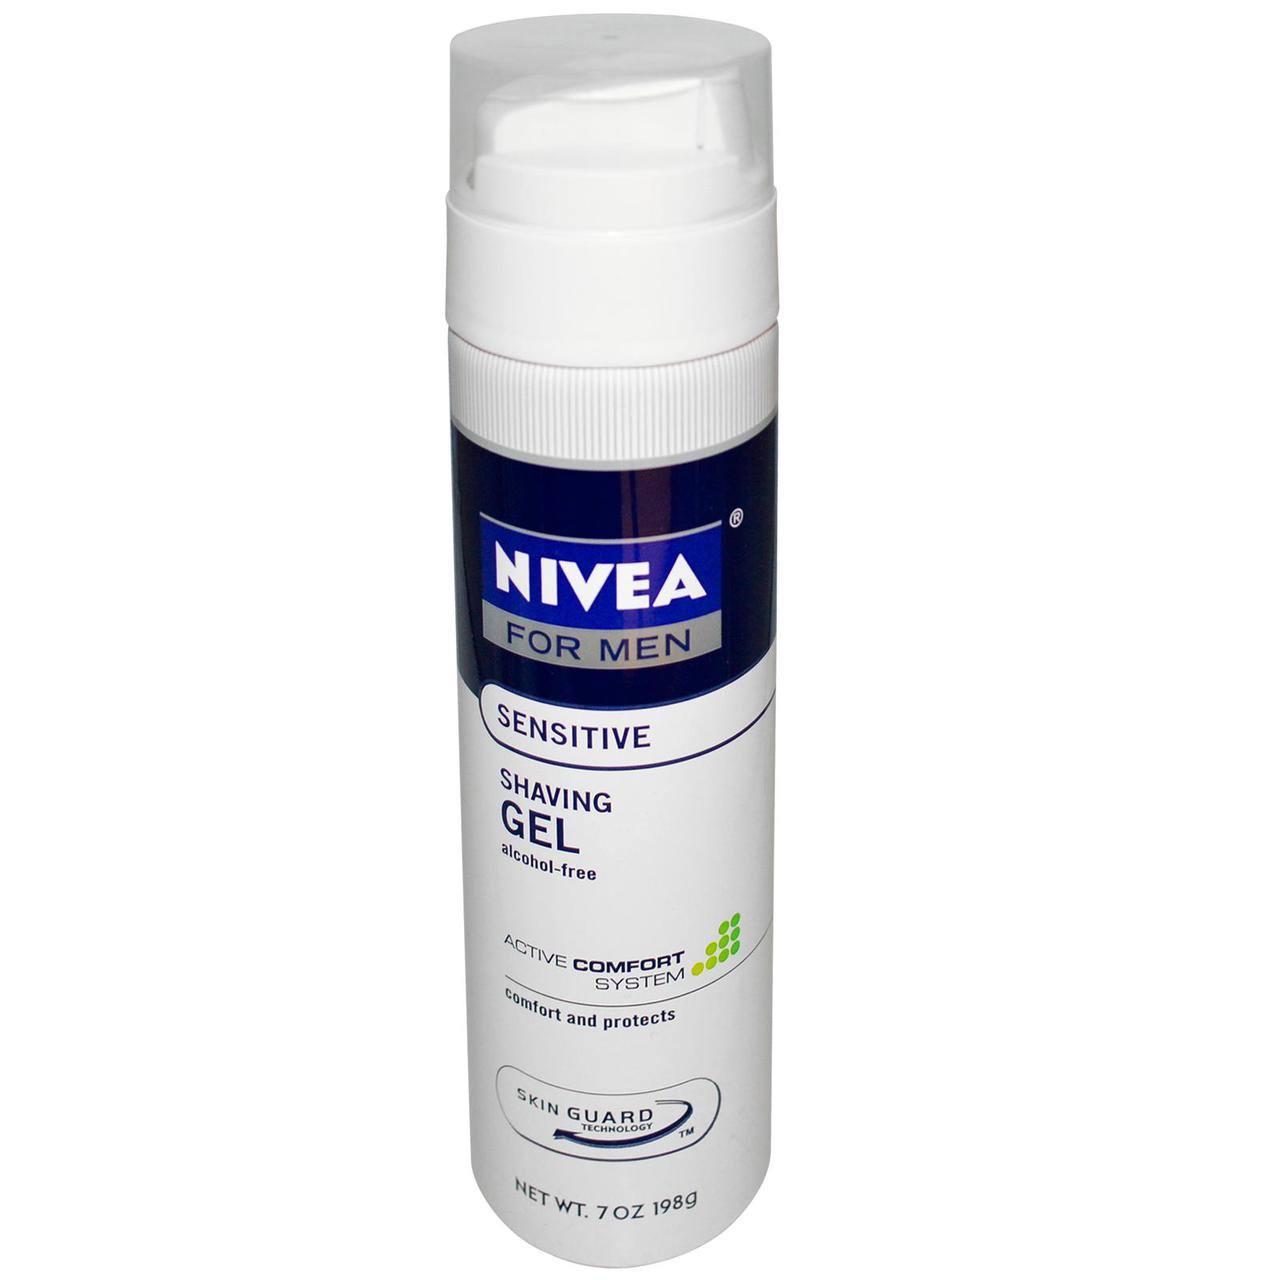 Nivea For Men Shaving Gel - Sensitive, 198g